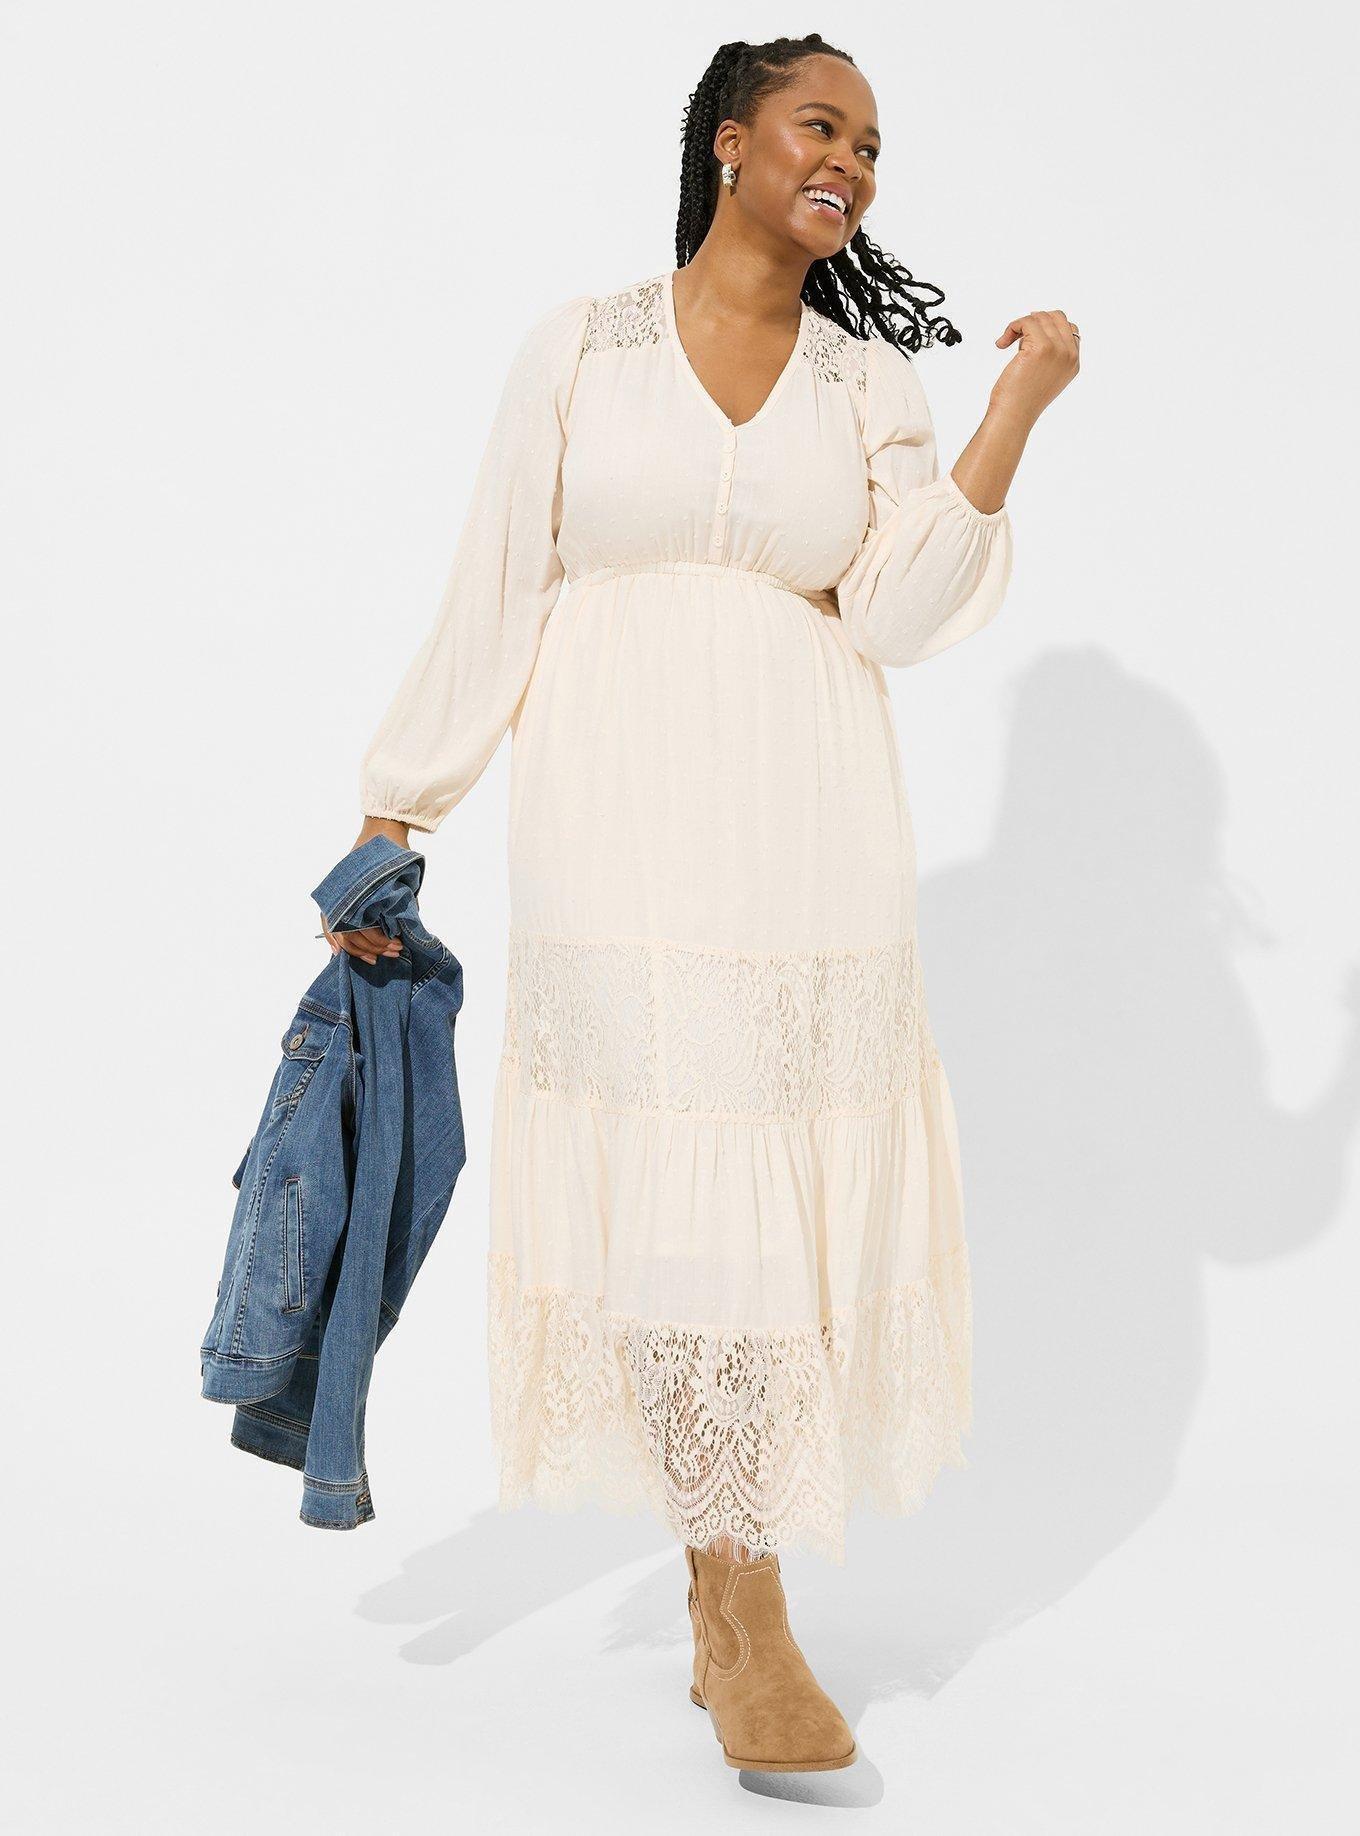 Plus Size White Lace Maxi Dress - Semi Sheer